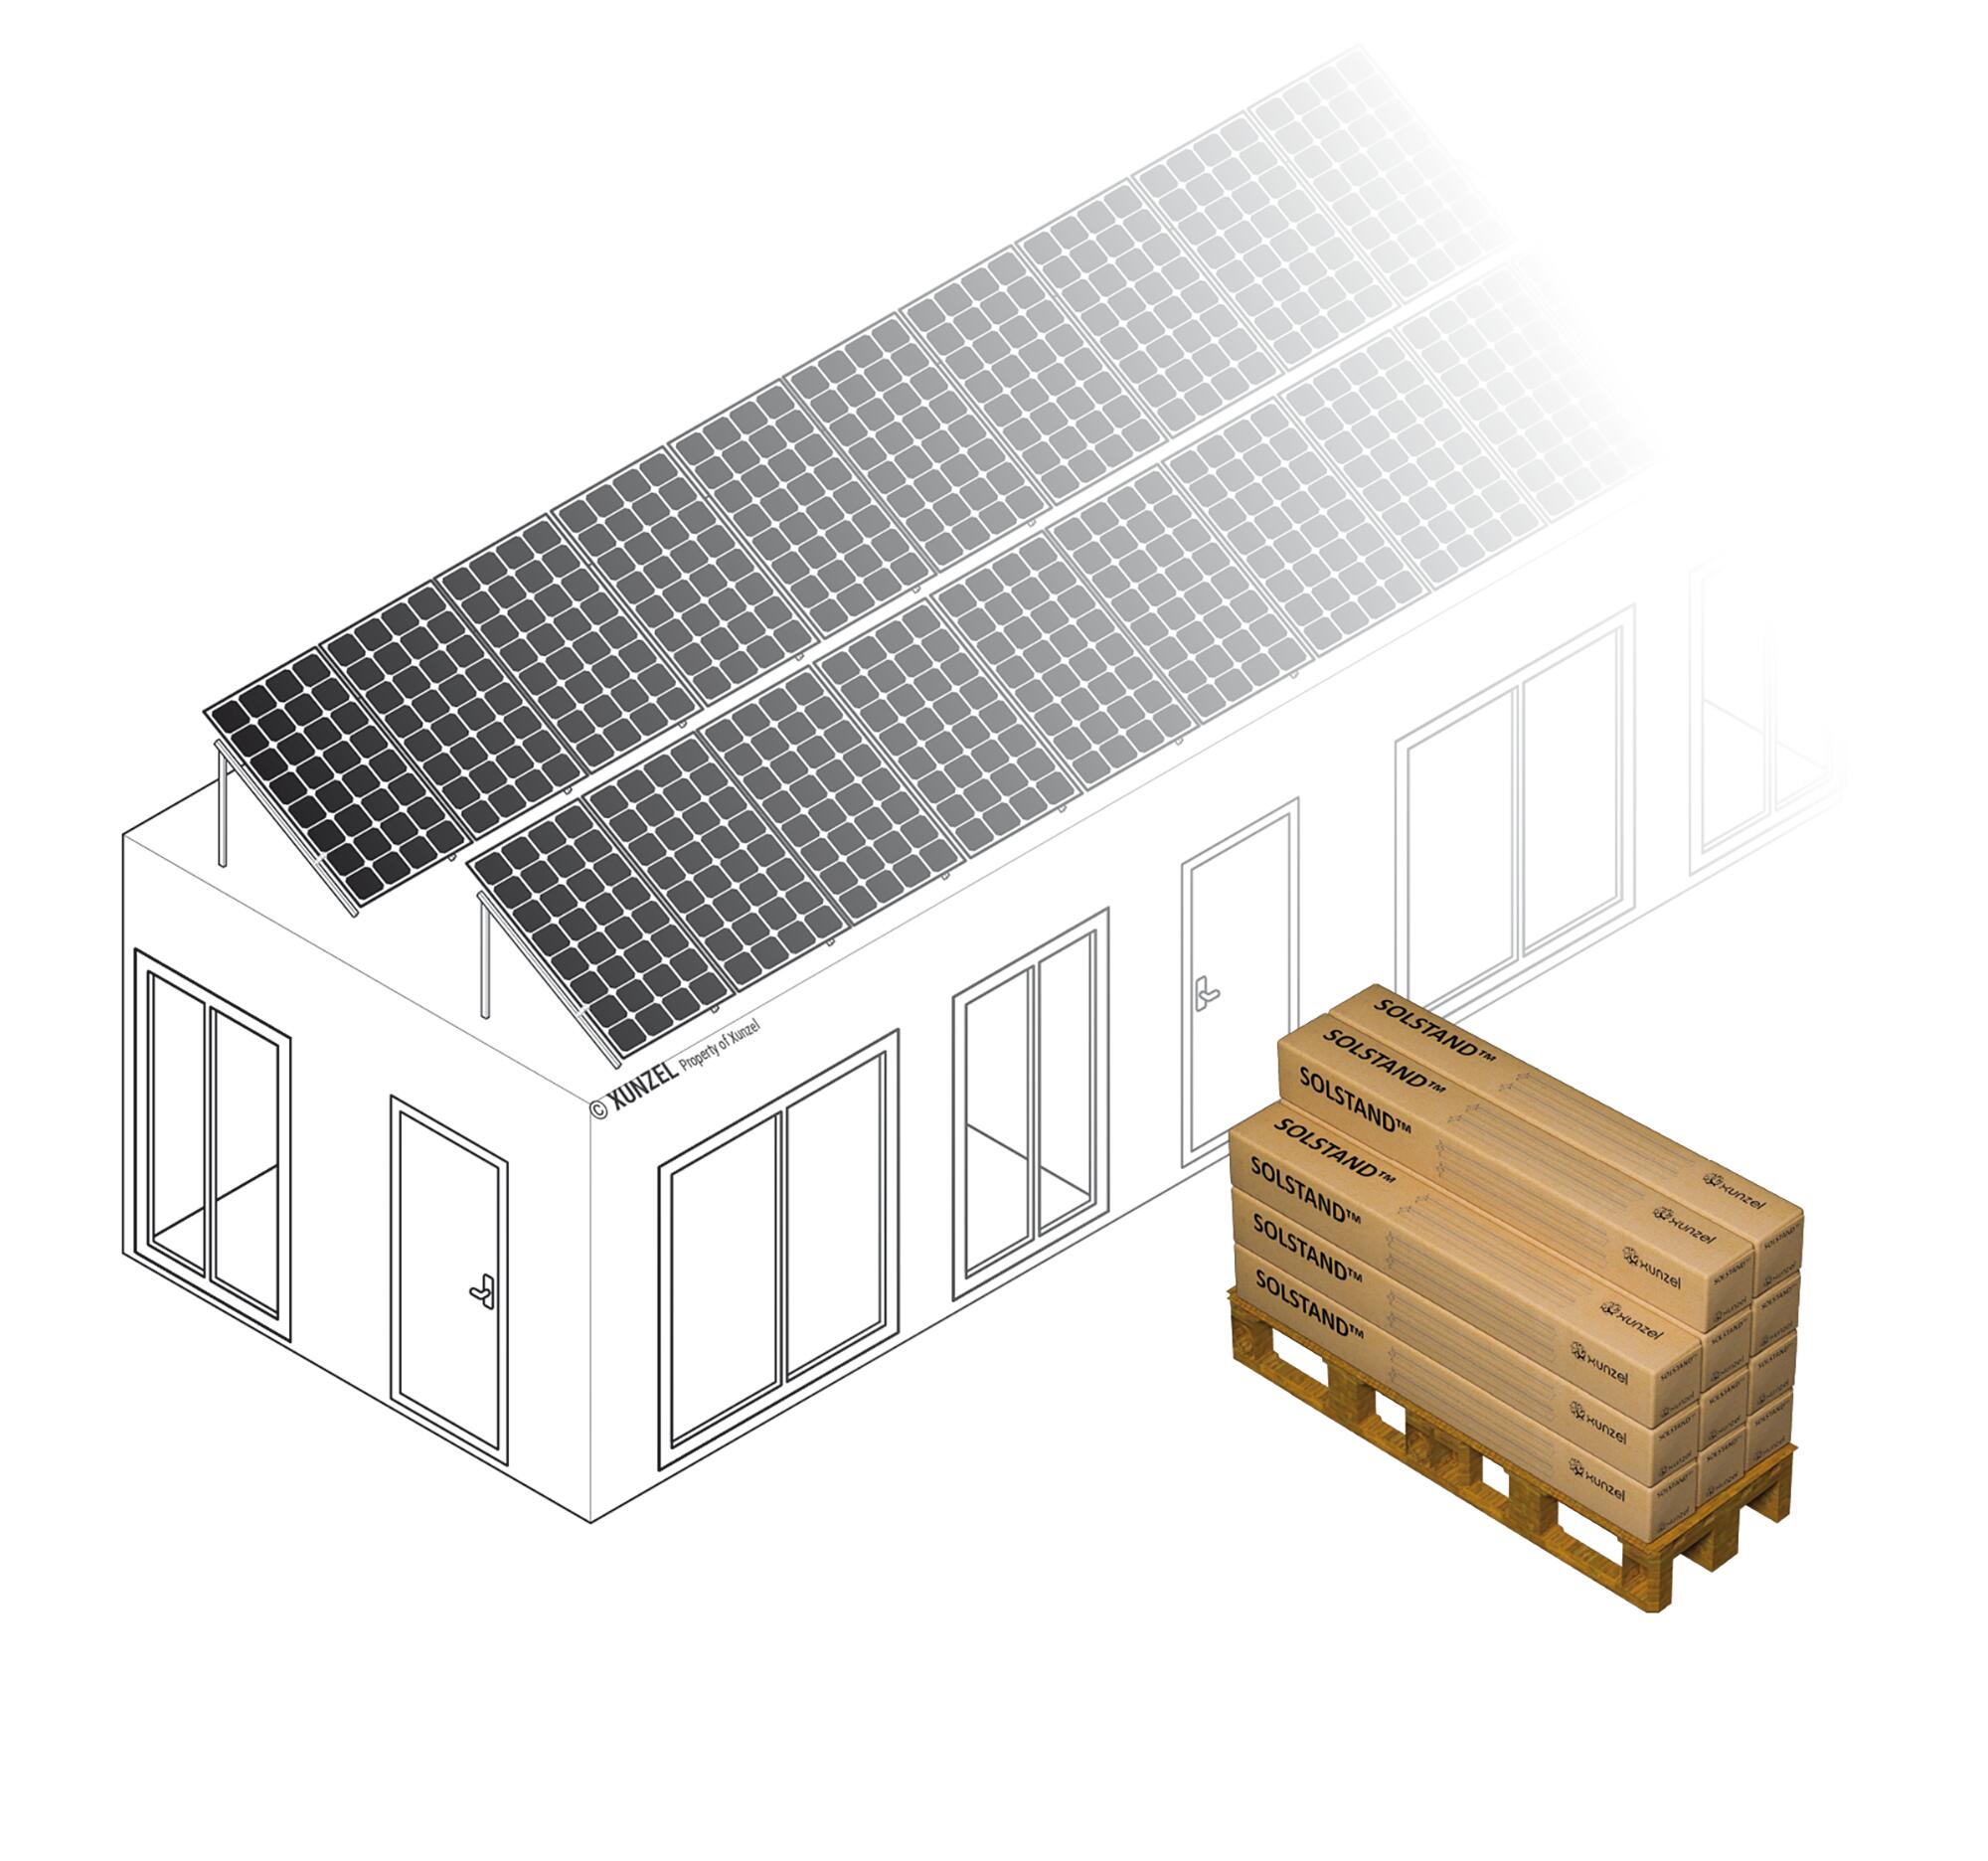 Soporte suelo/cubierta plana solstand-32g-xxl para 32 paneles solarpower-425w